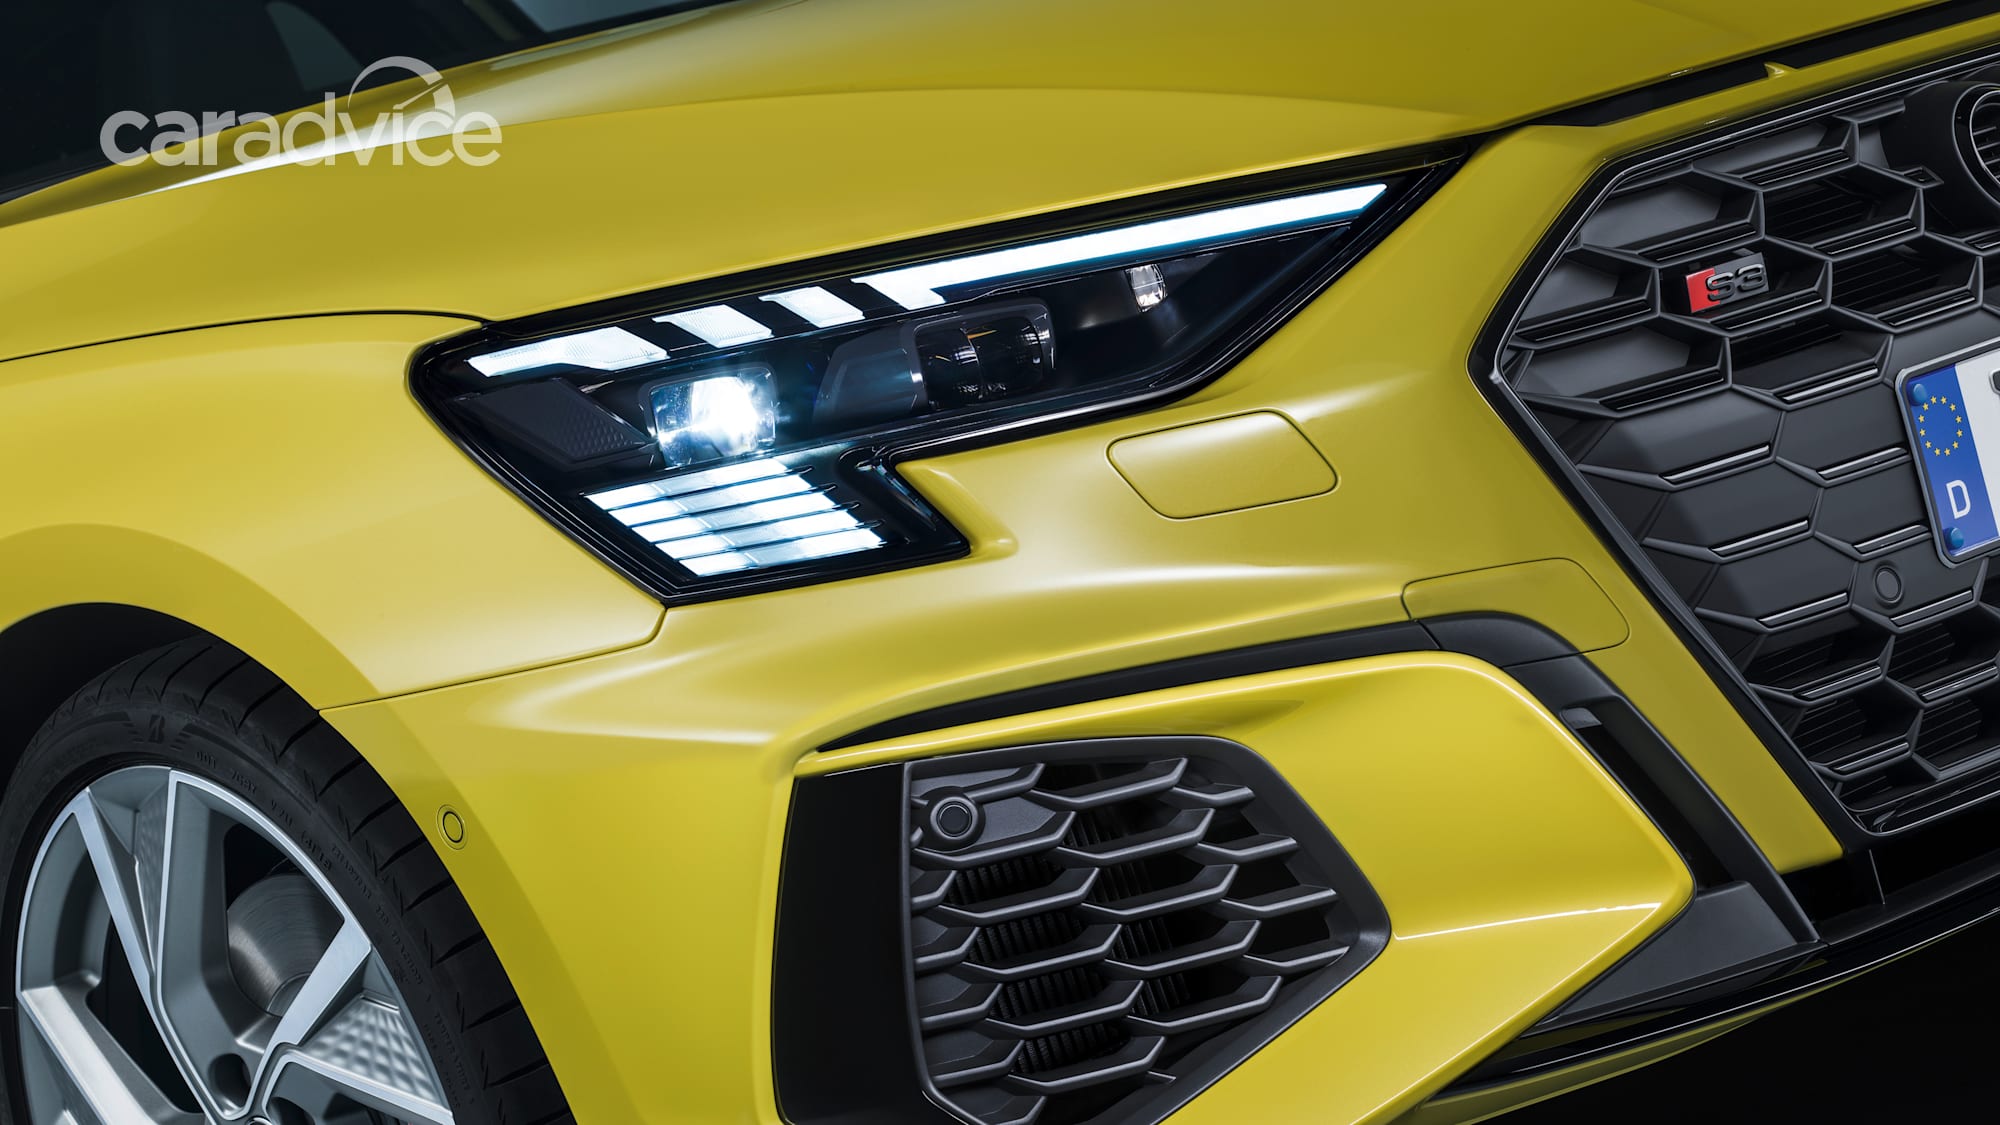 2021 Audi S3 Sportback and sedan revealed, Australia ...